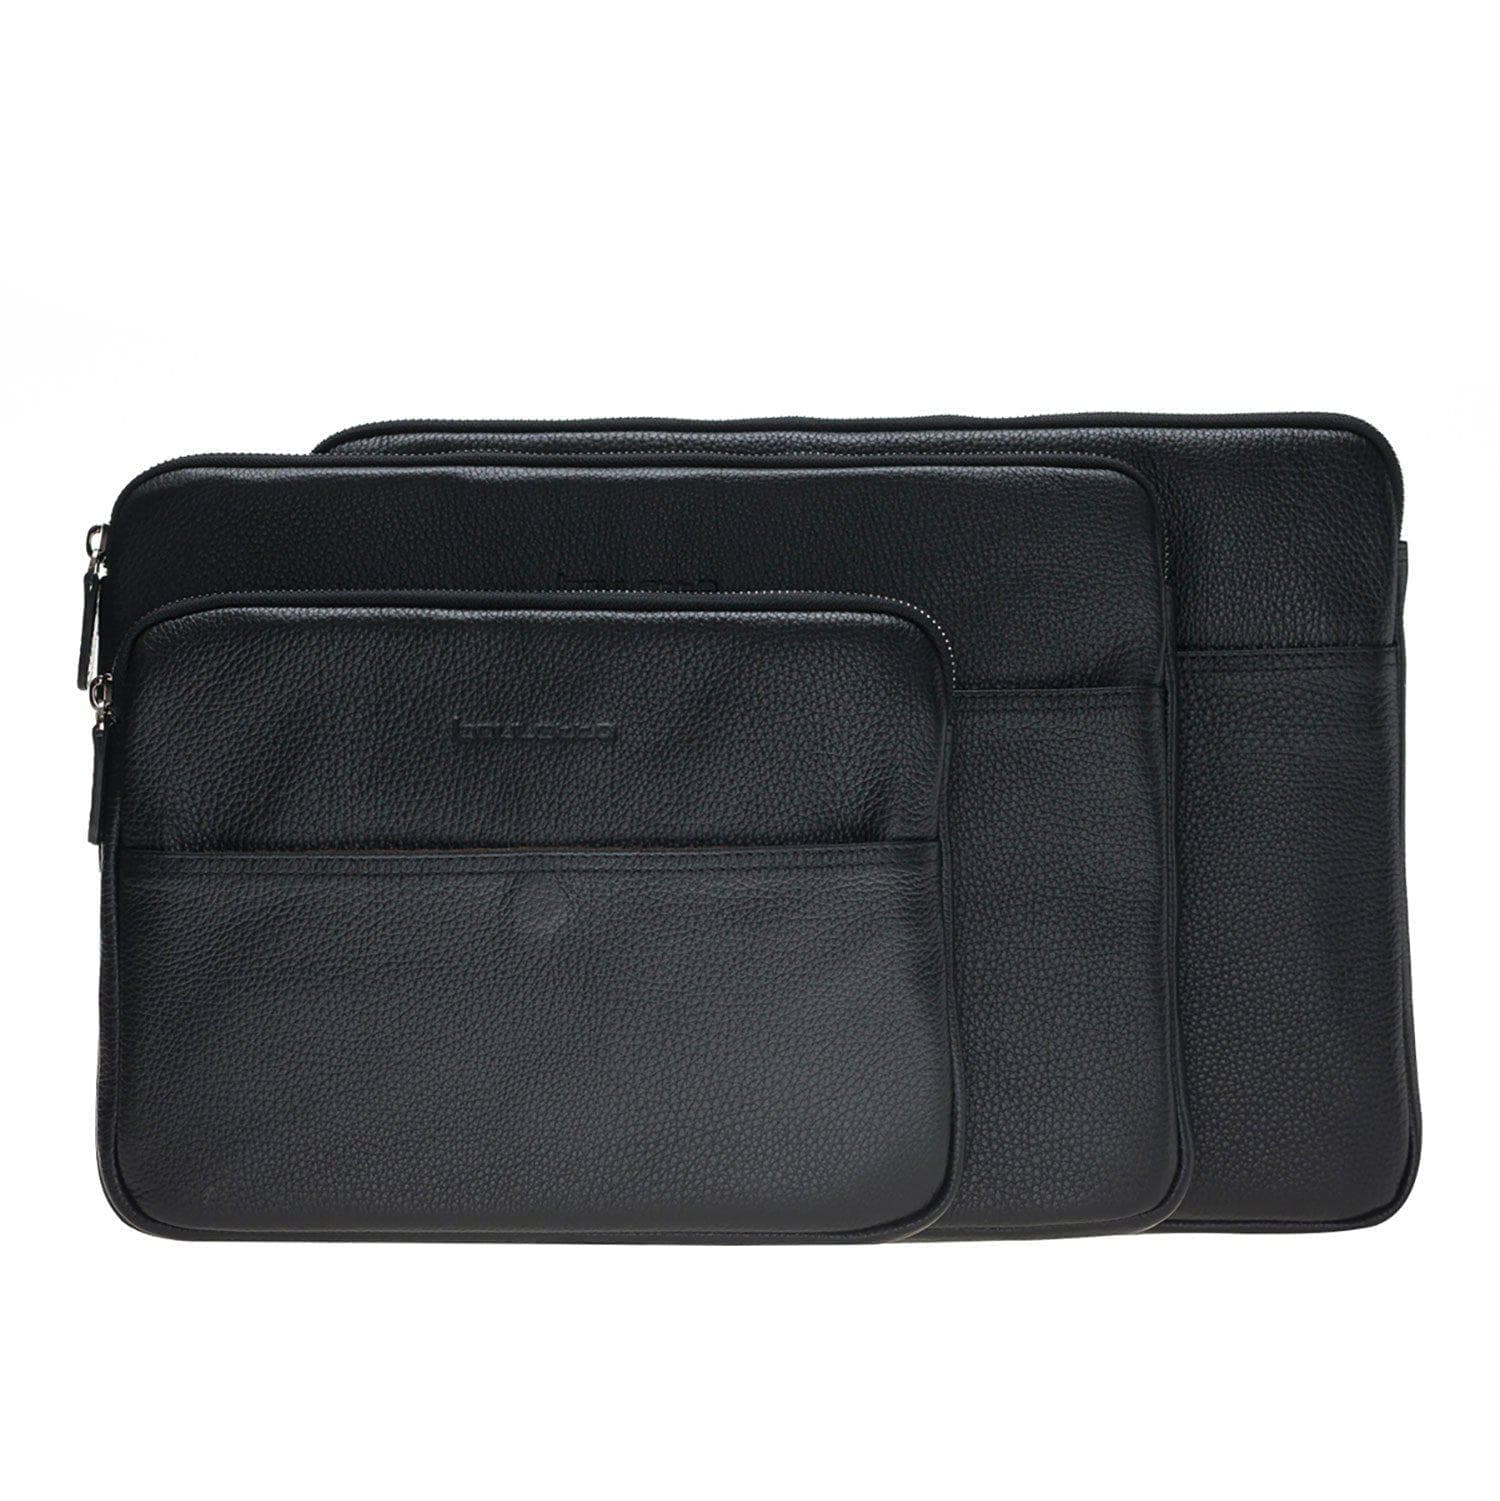 Sleeve Awe Genuine Leather iPad and MacBook Sleeve Bouletta Shop